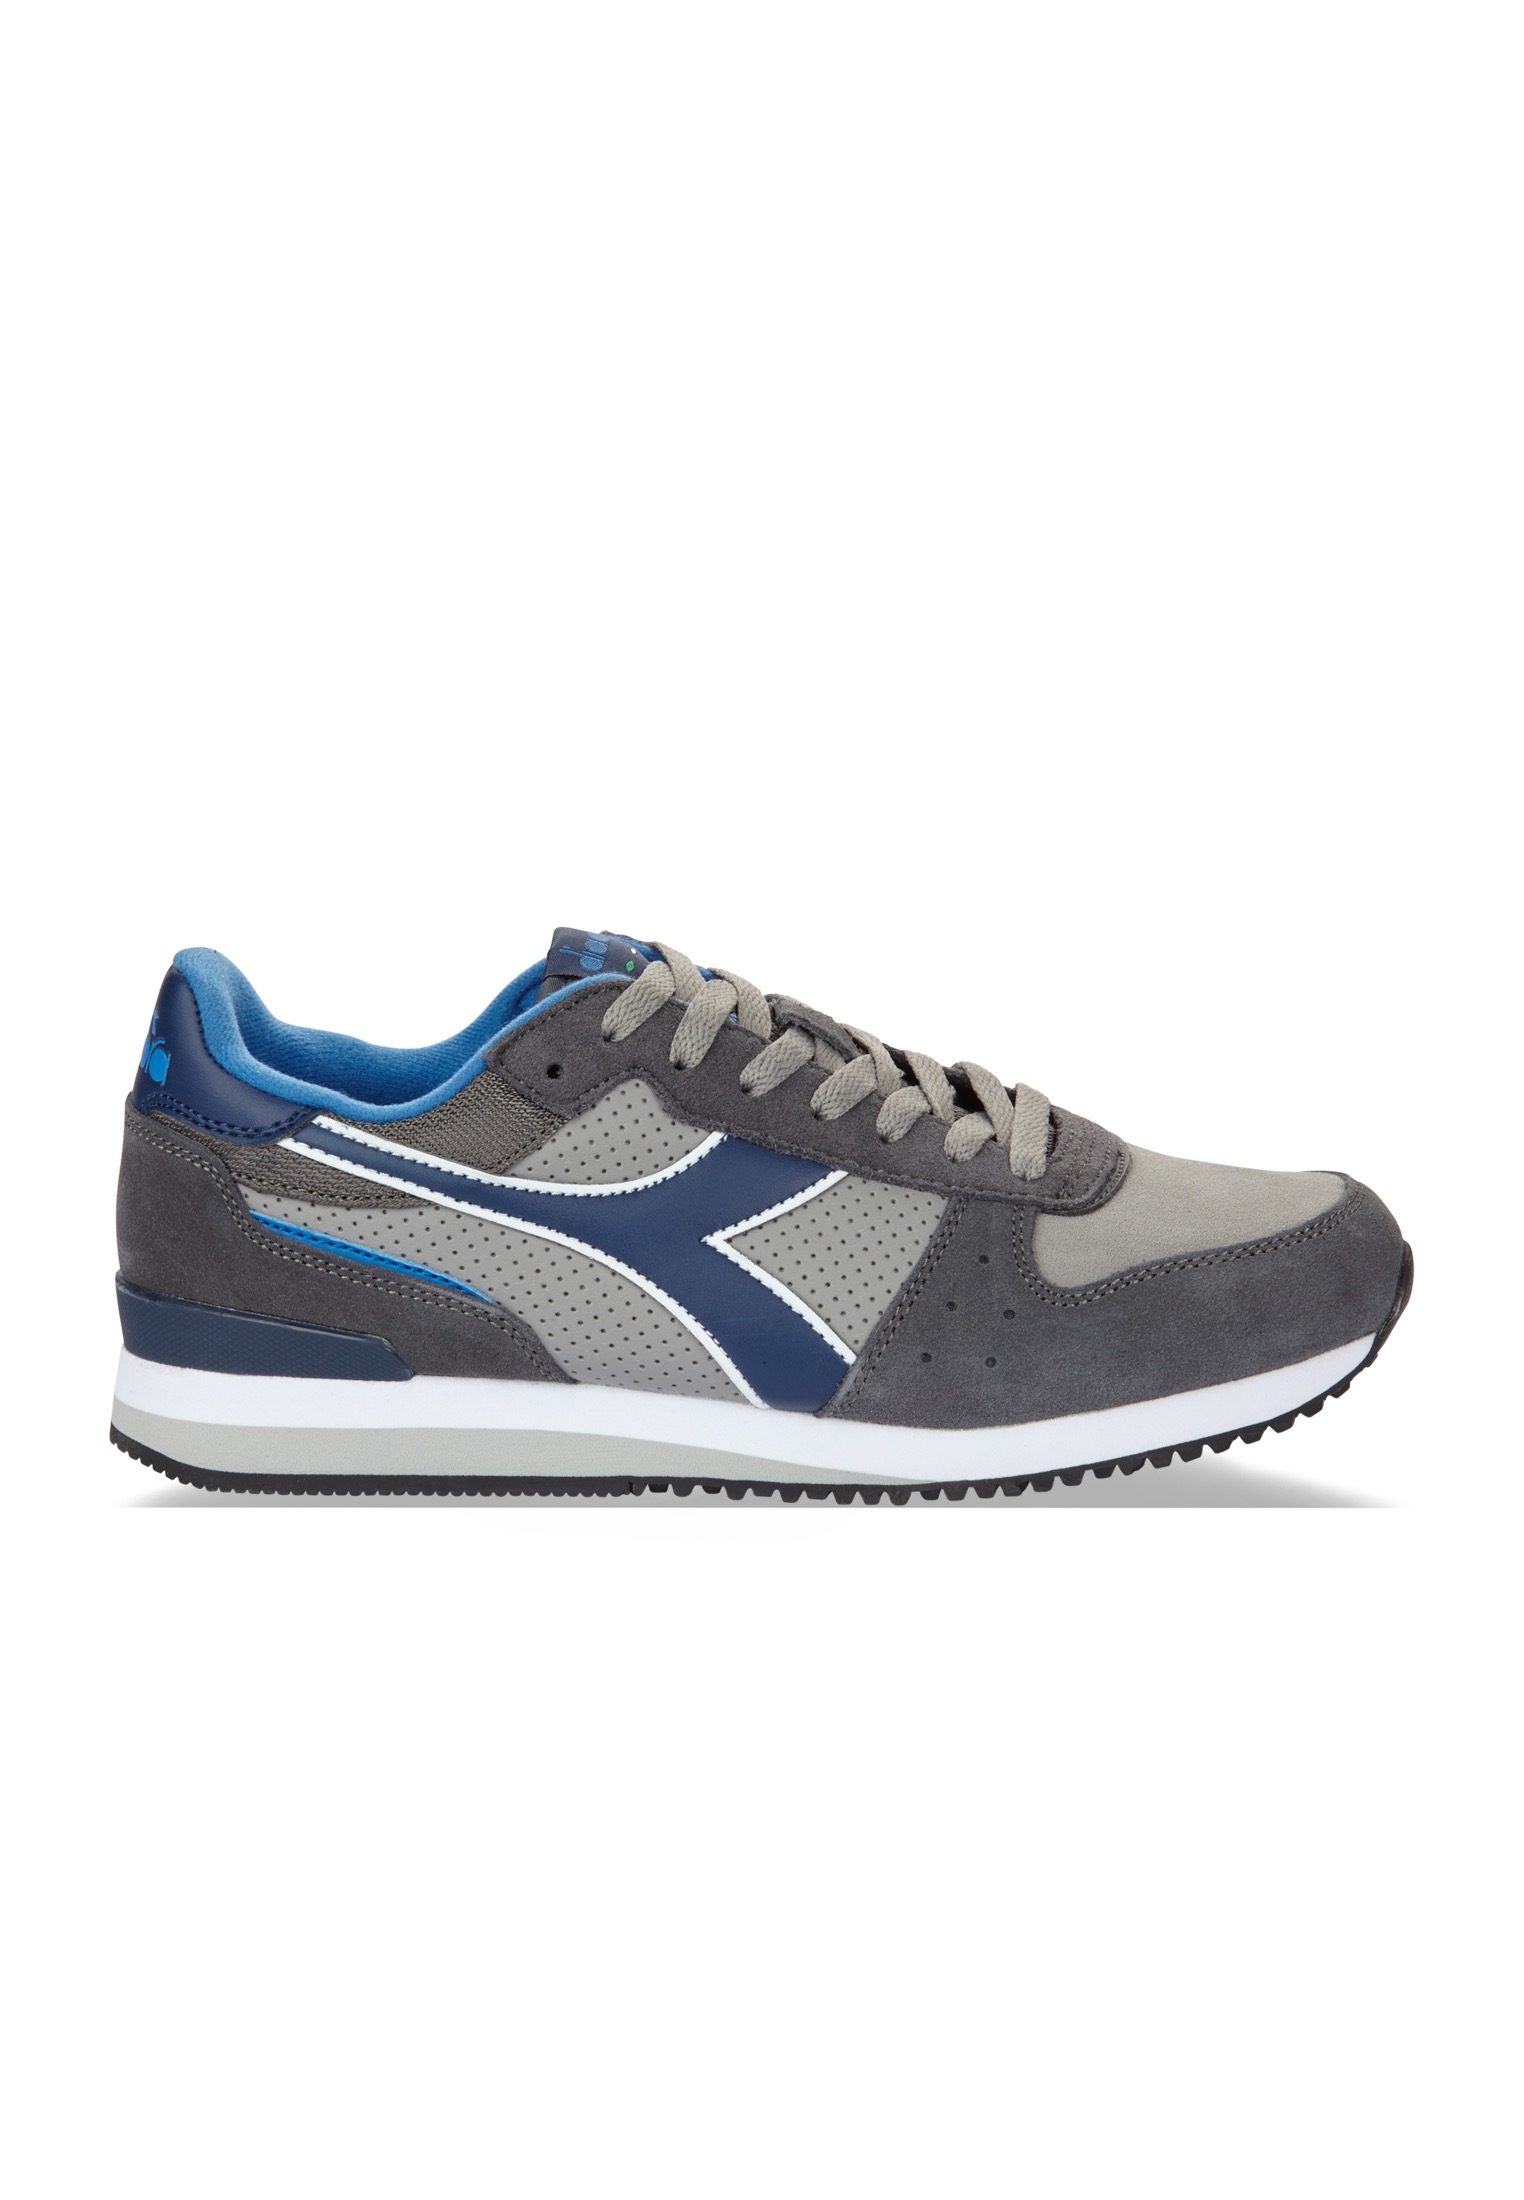 Diadora - Sport shoes MALONE S for man 